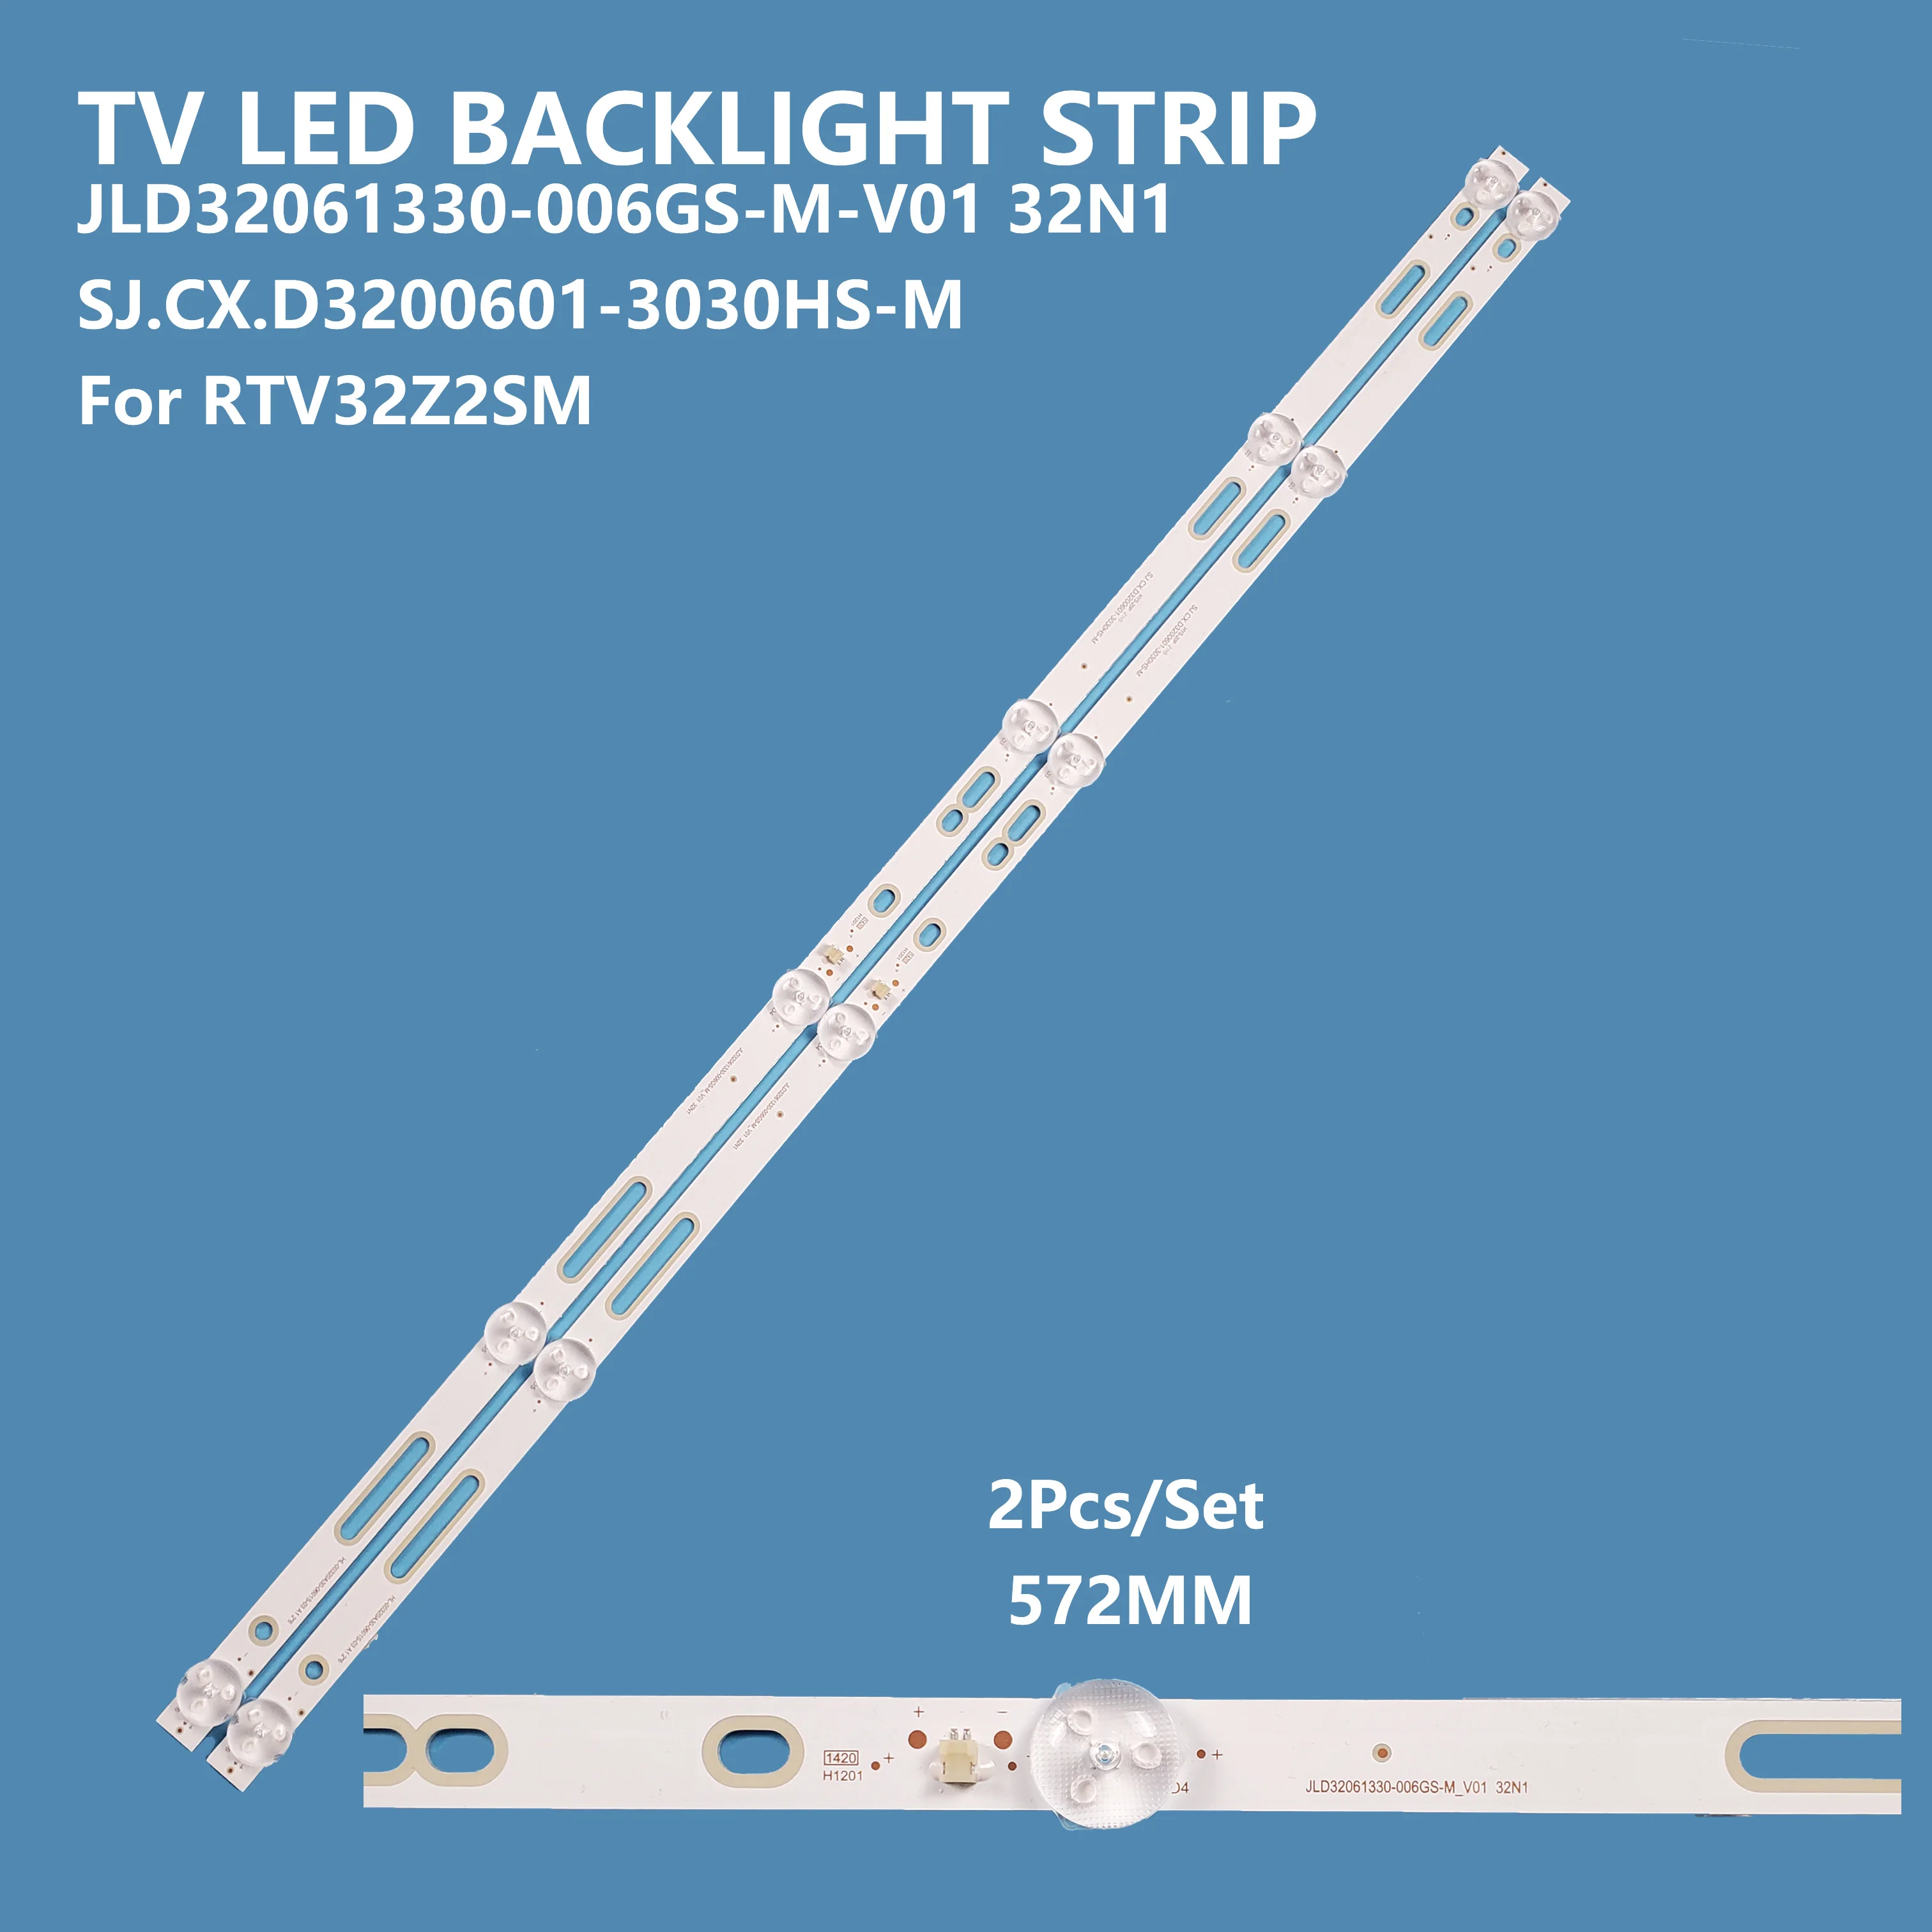 2Pcs/set LED Backlight Bar Light Strip JL.D32061330-006GS-M-V01 32N1 HL-00320A30-0601S-03 A1 for 32inch TV Accessories Repair 2pcs set led backlight bar strip v7dn 320sm0 r1 bn96 43703a lm41 00419a 2017 svs32 hd fcom for samsung 32inch tv accessories